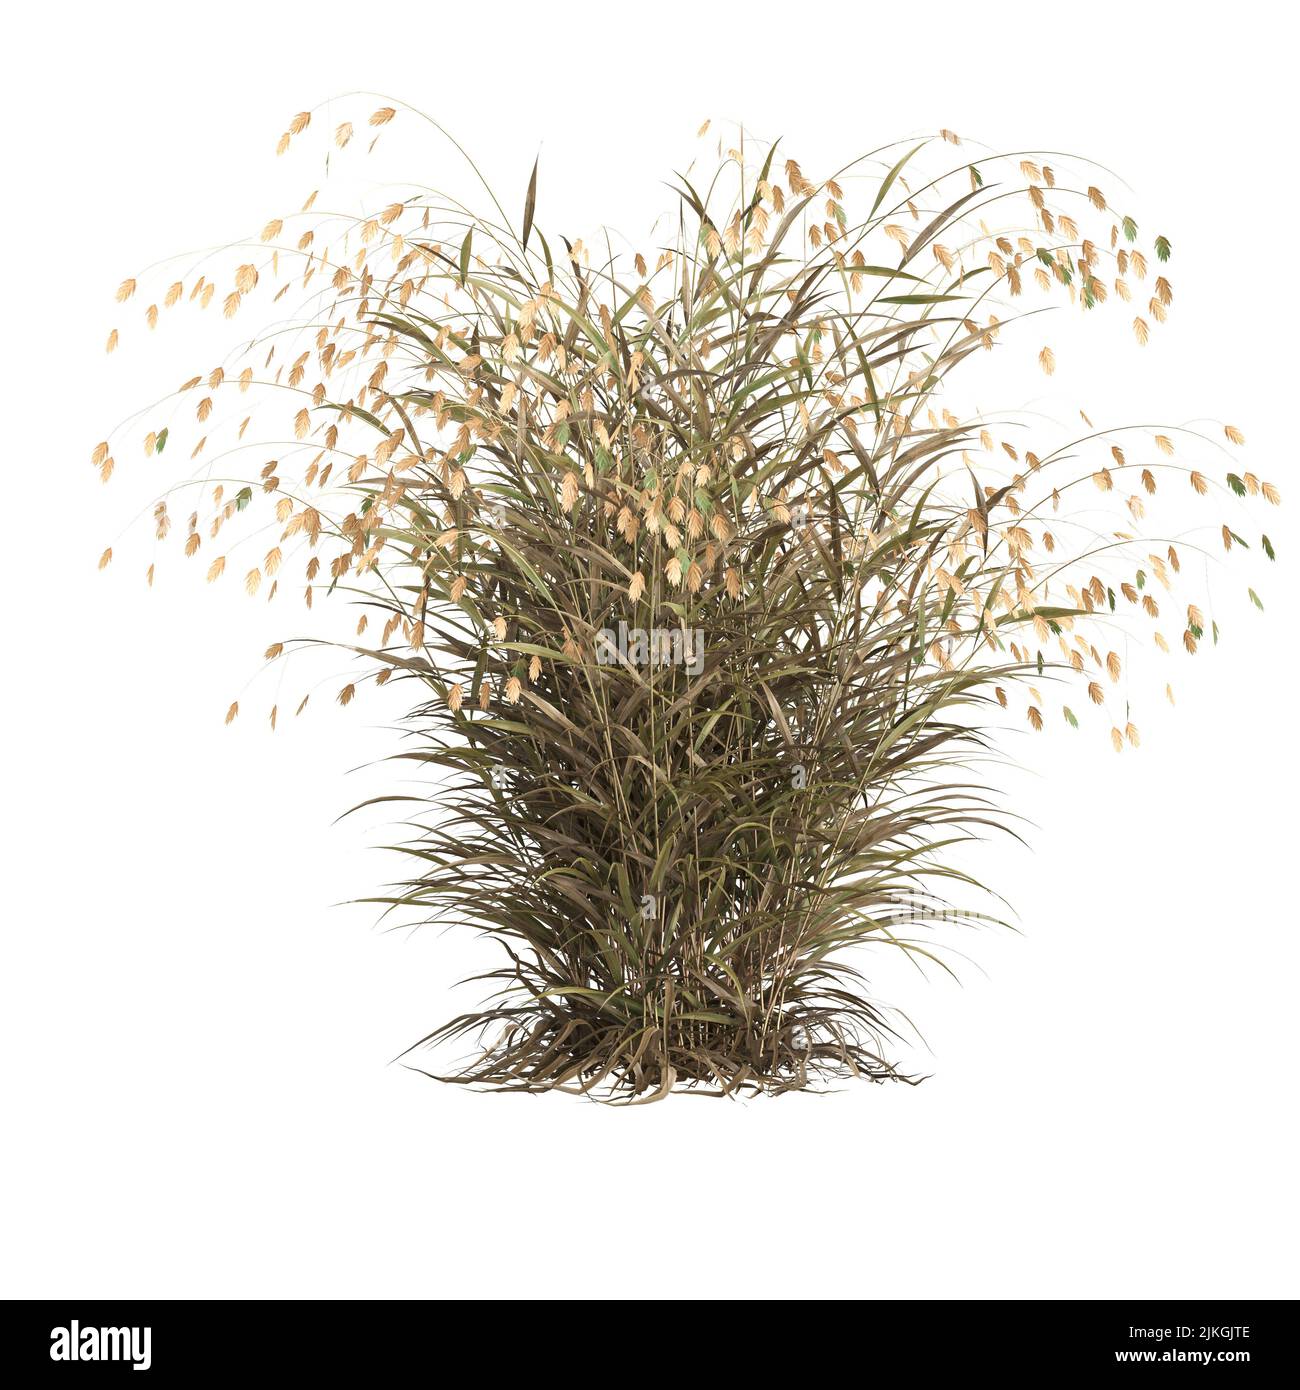 3d illustration of chasmanthium latifolium grass isolated on white background Stock Photo